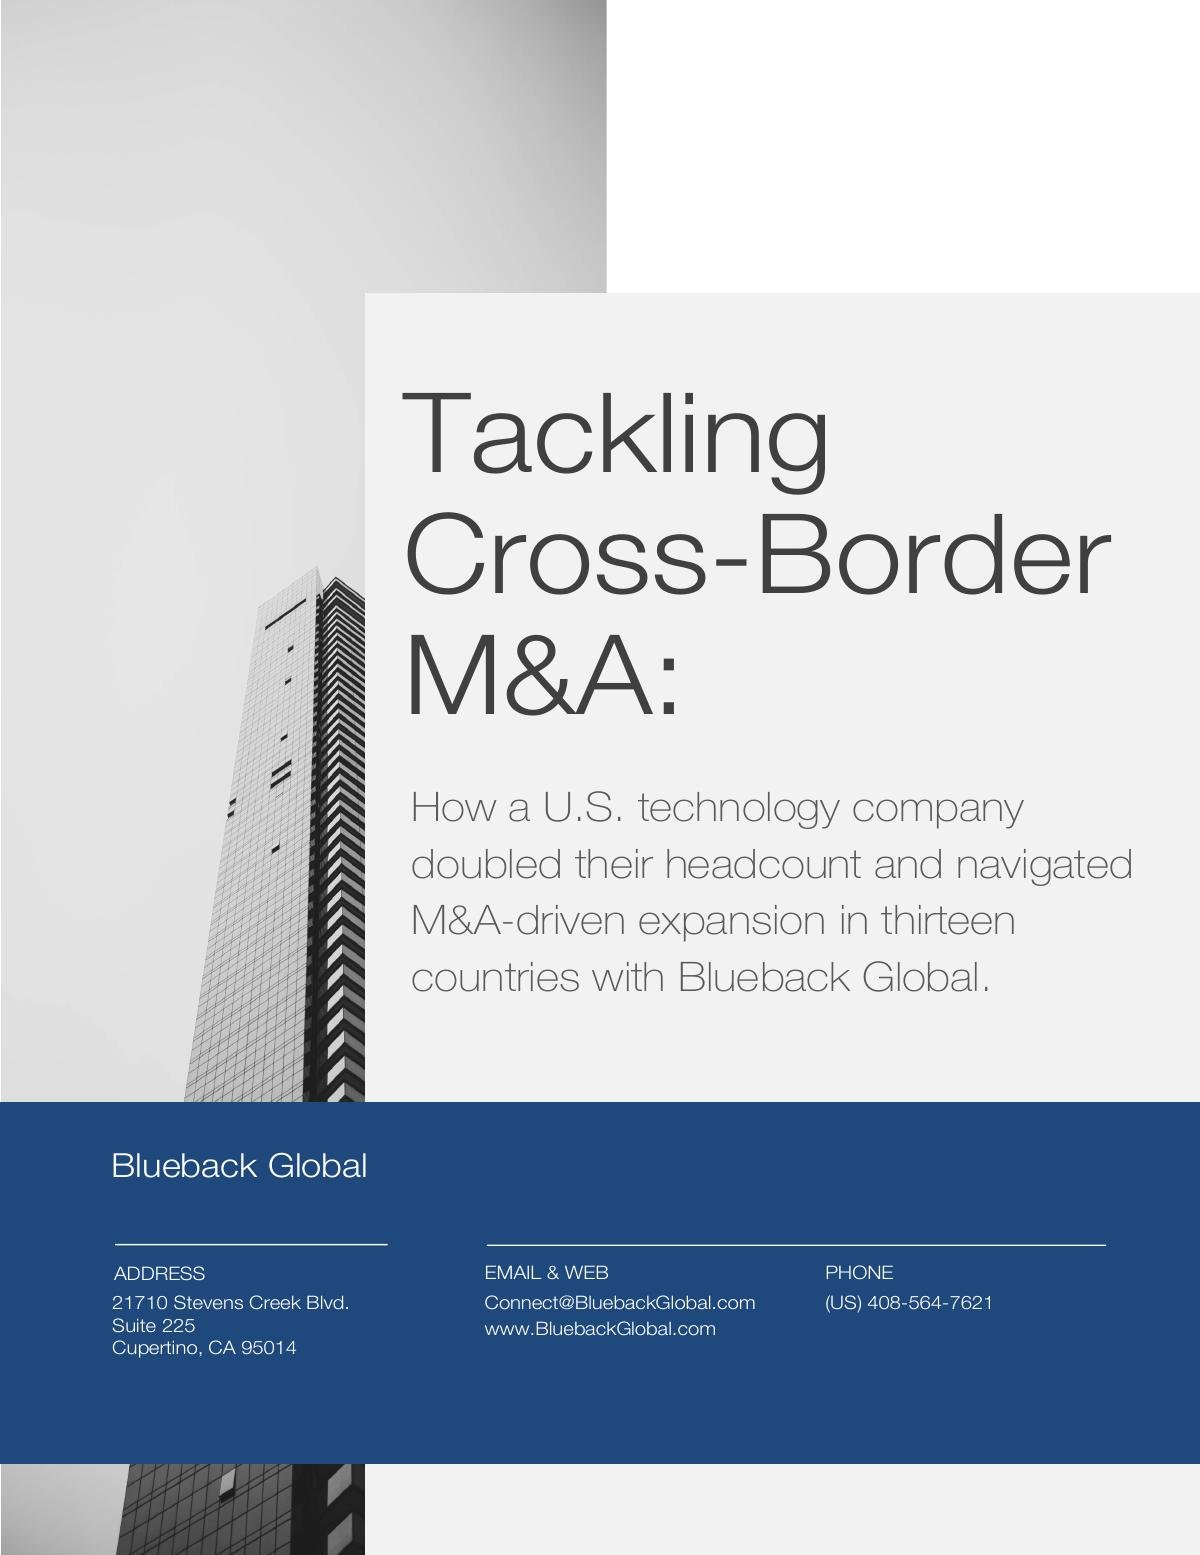 Tackling Cross-Border M&A